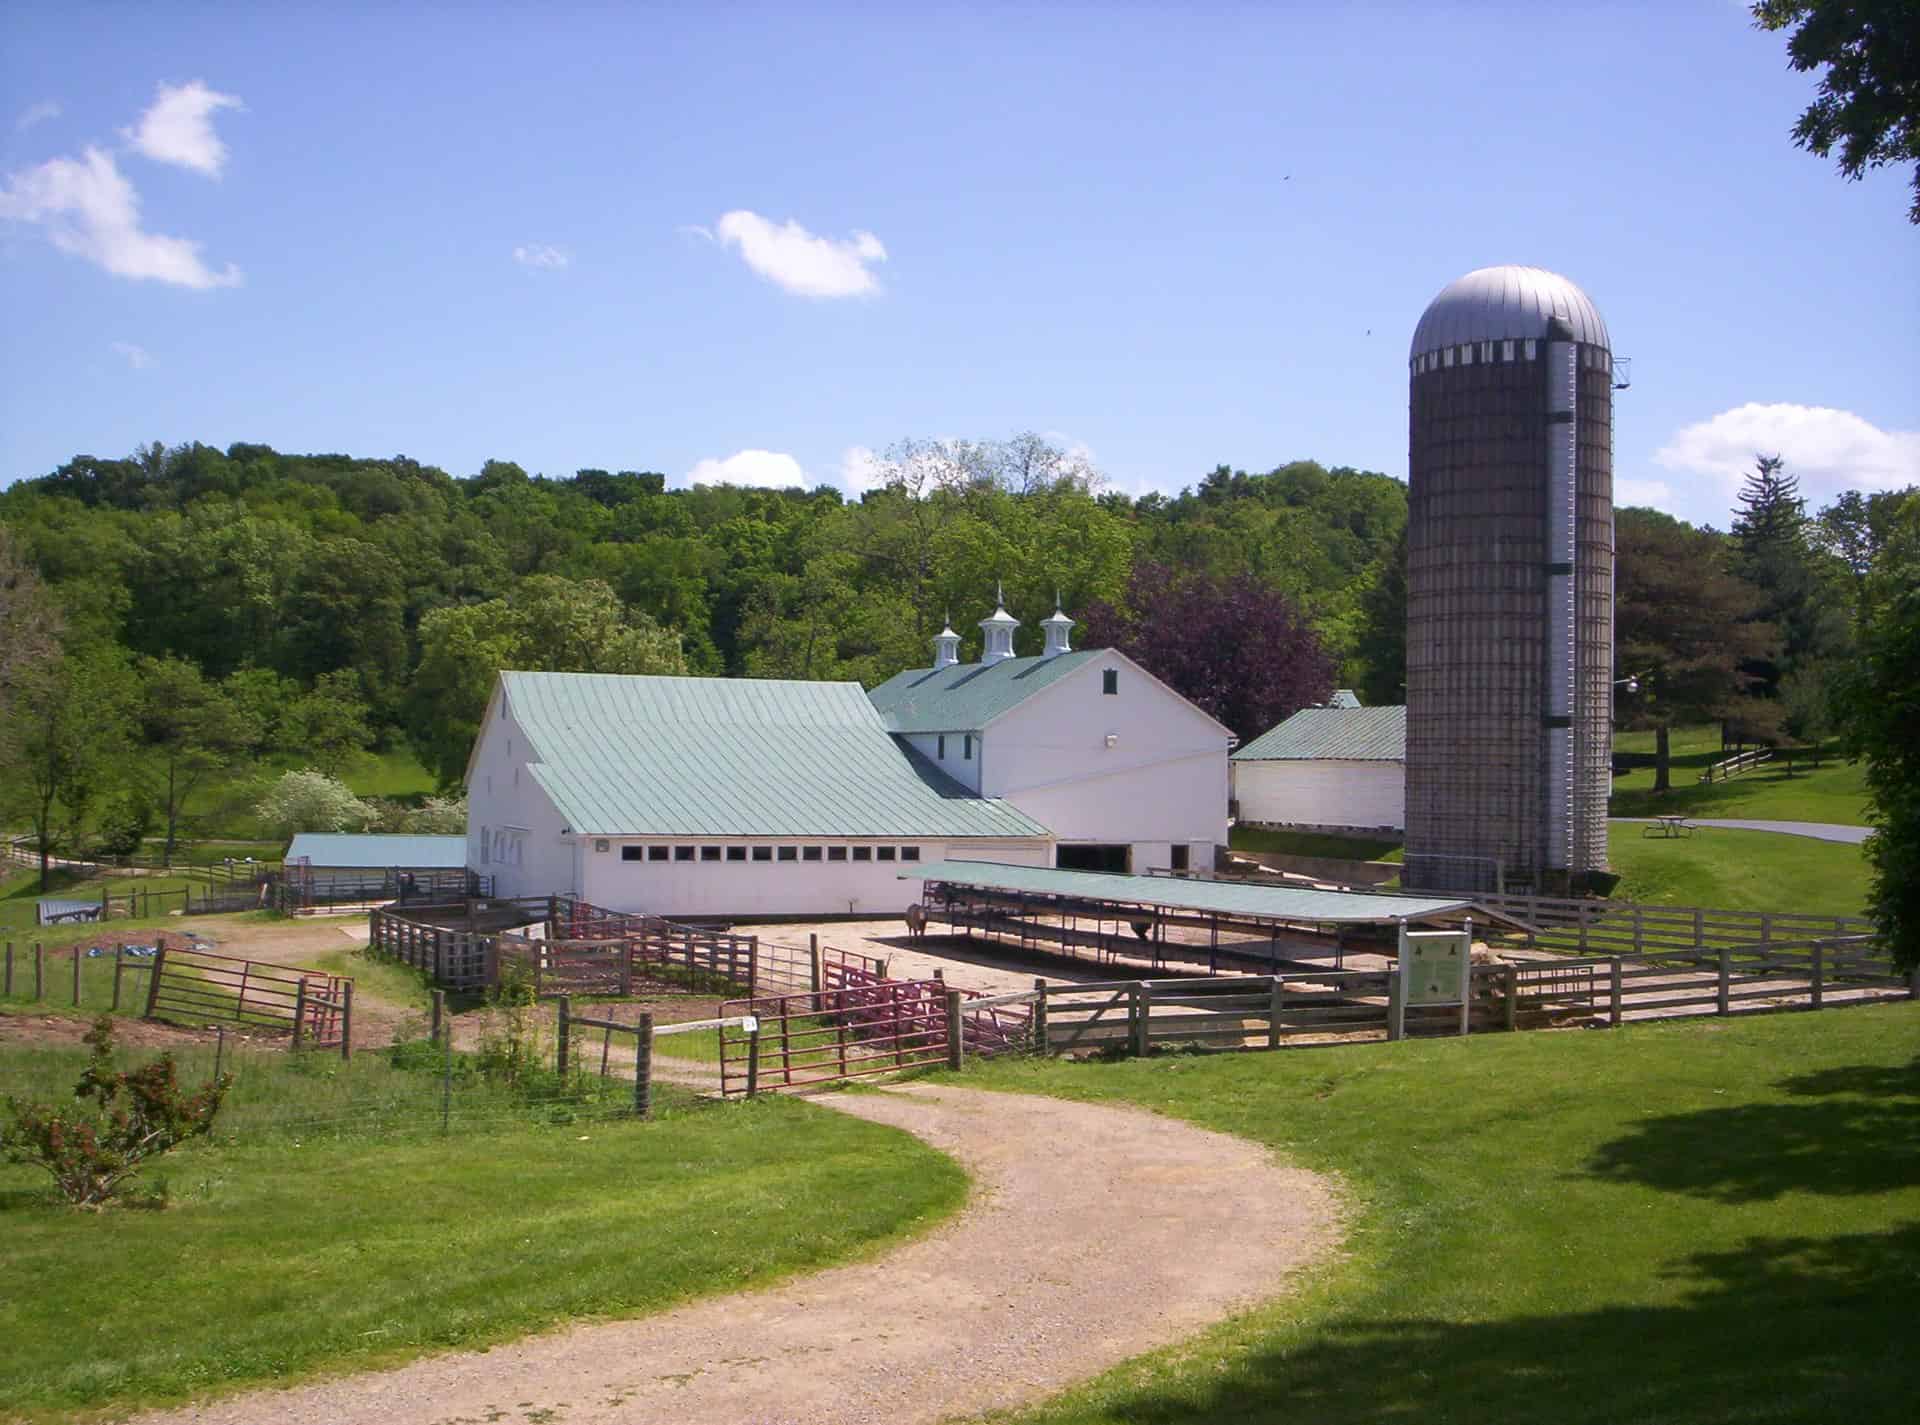 Malabar Farm State Farm - Lucas Ohio - Pic of Main Barn